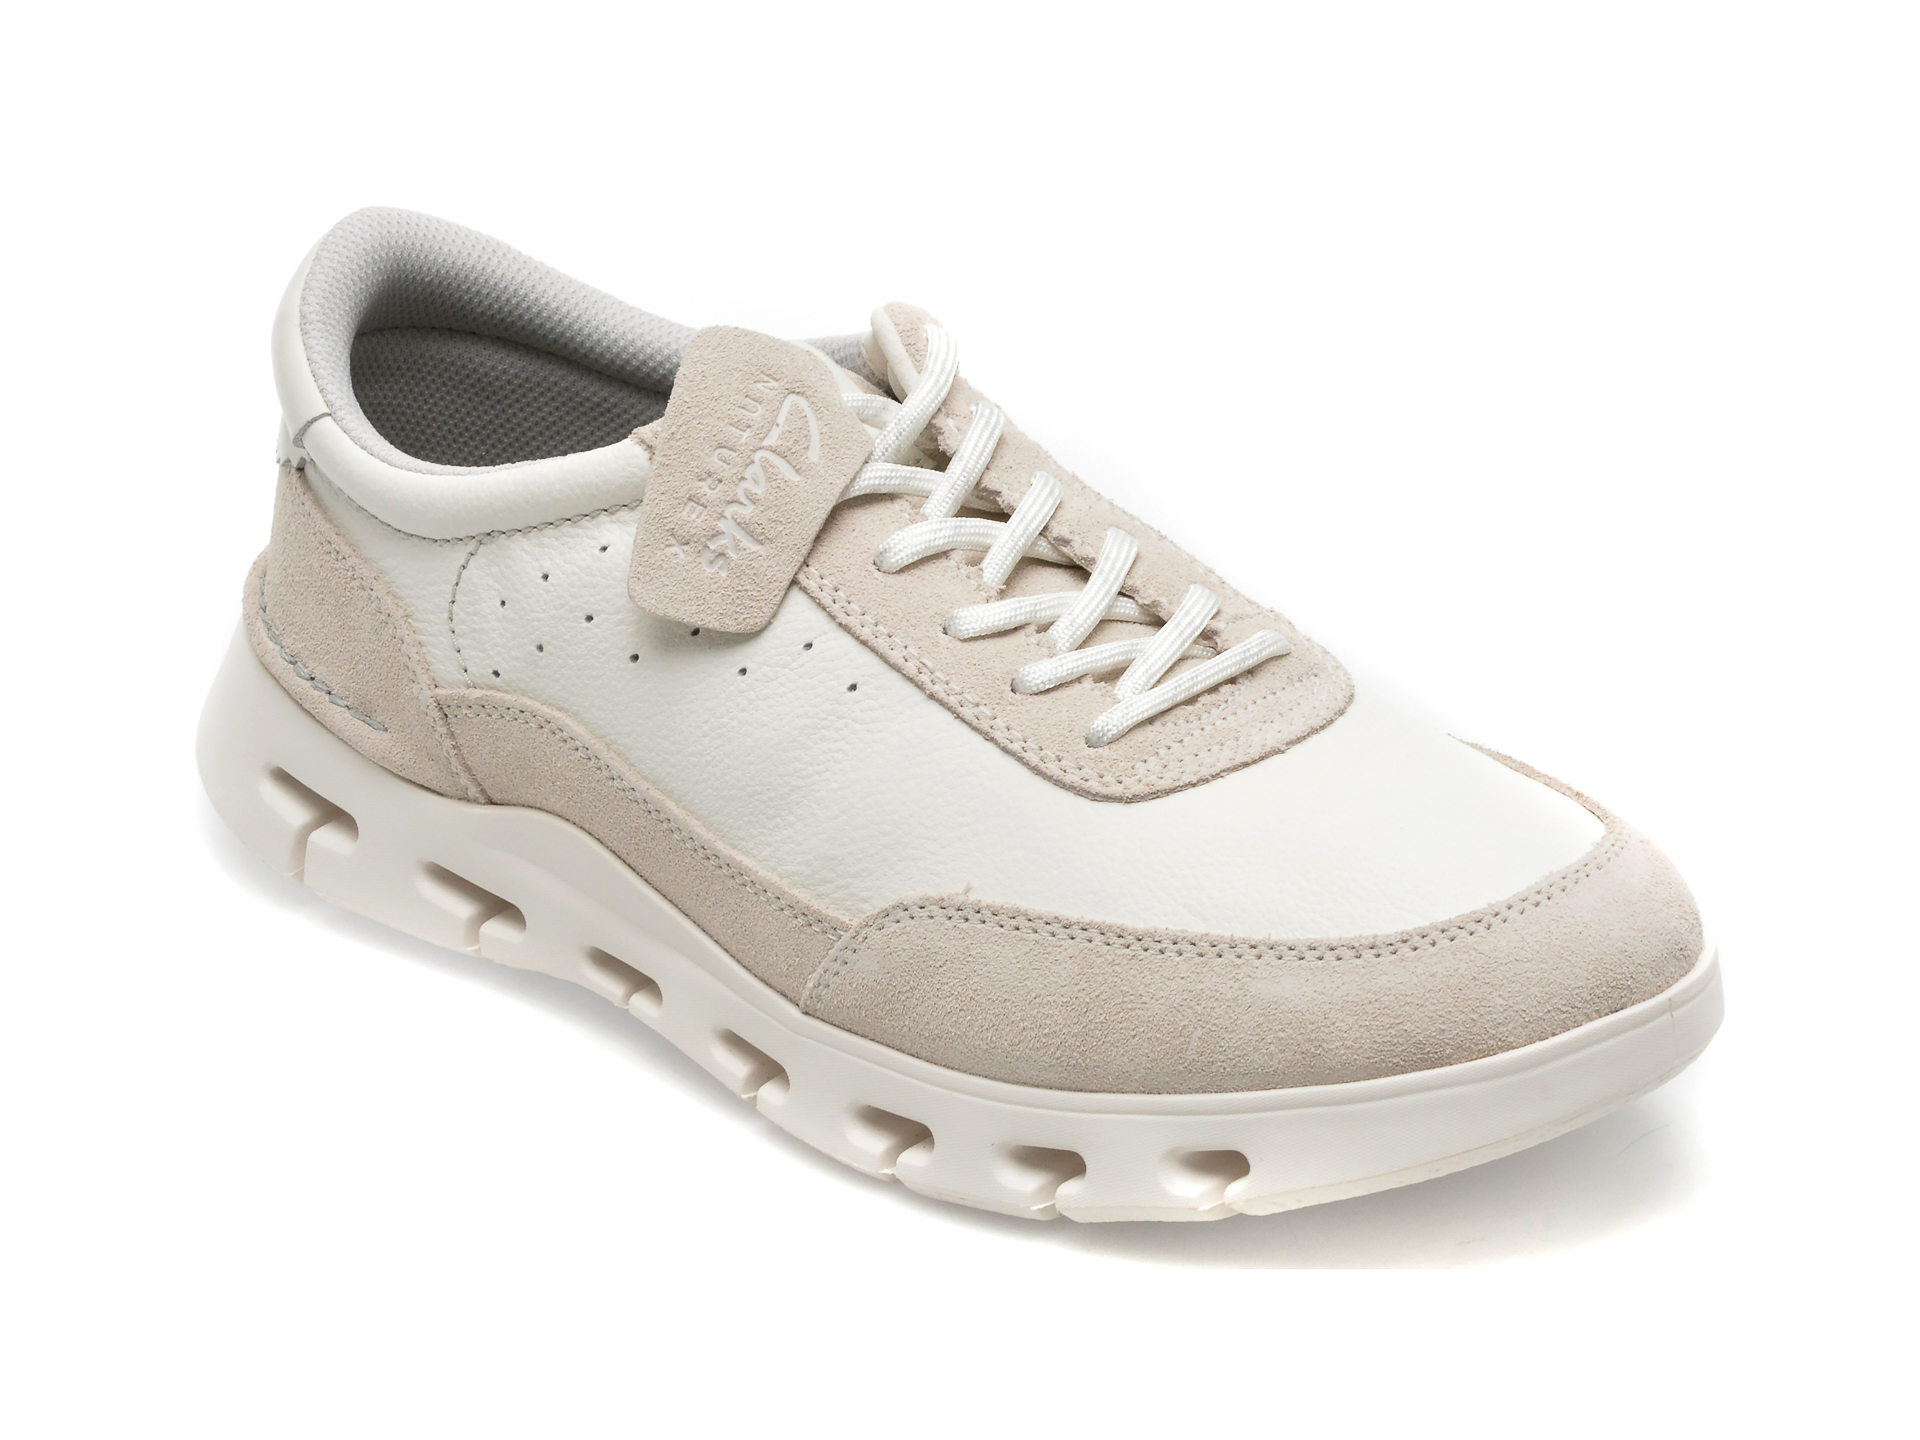 Pantofi CLARKS albi, NATURE X ONE 13-N, din piele naturala /barbati/pantofi